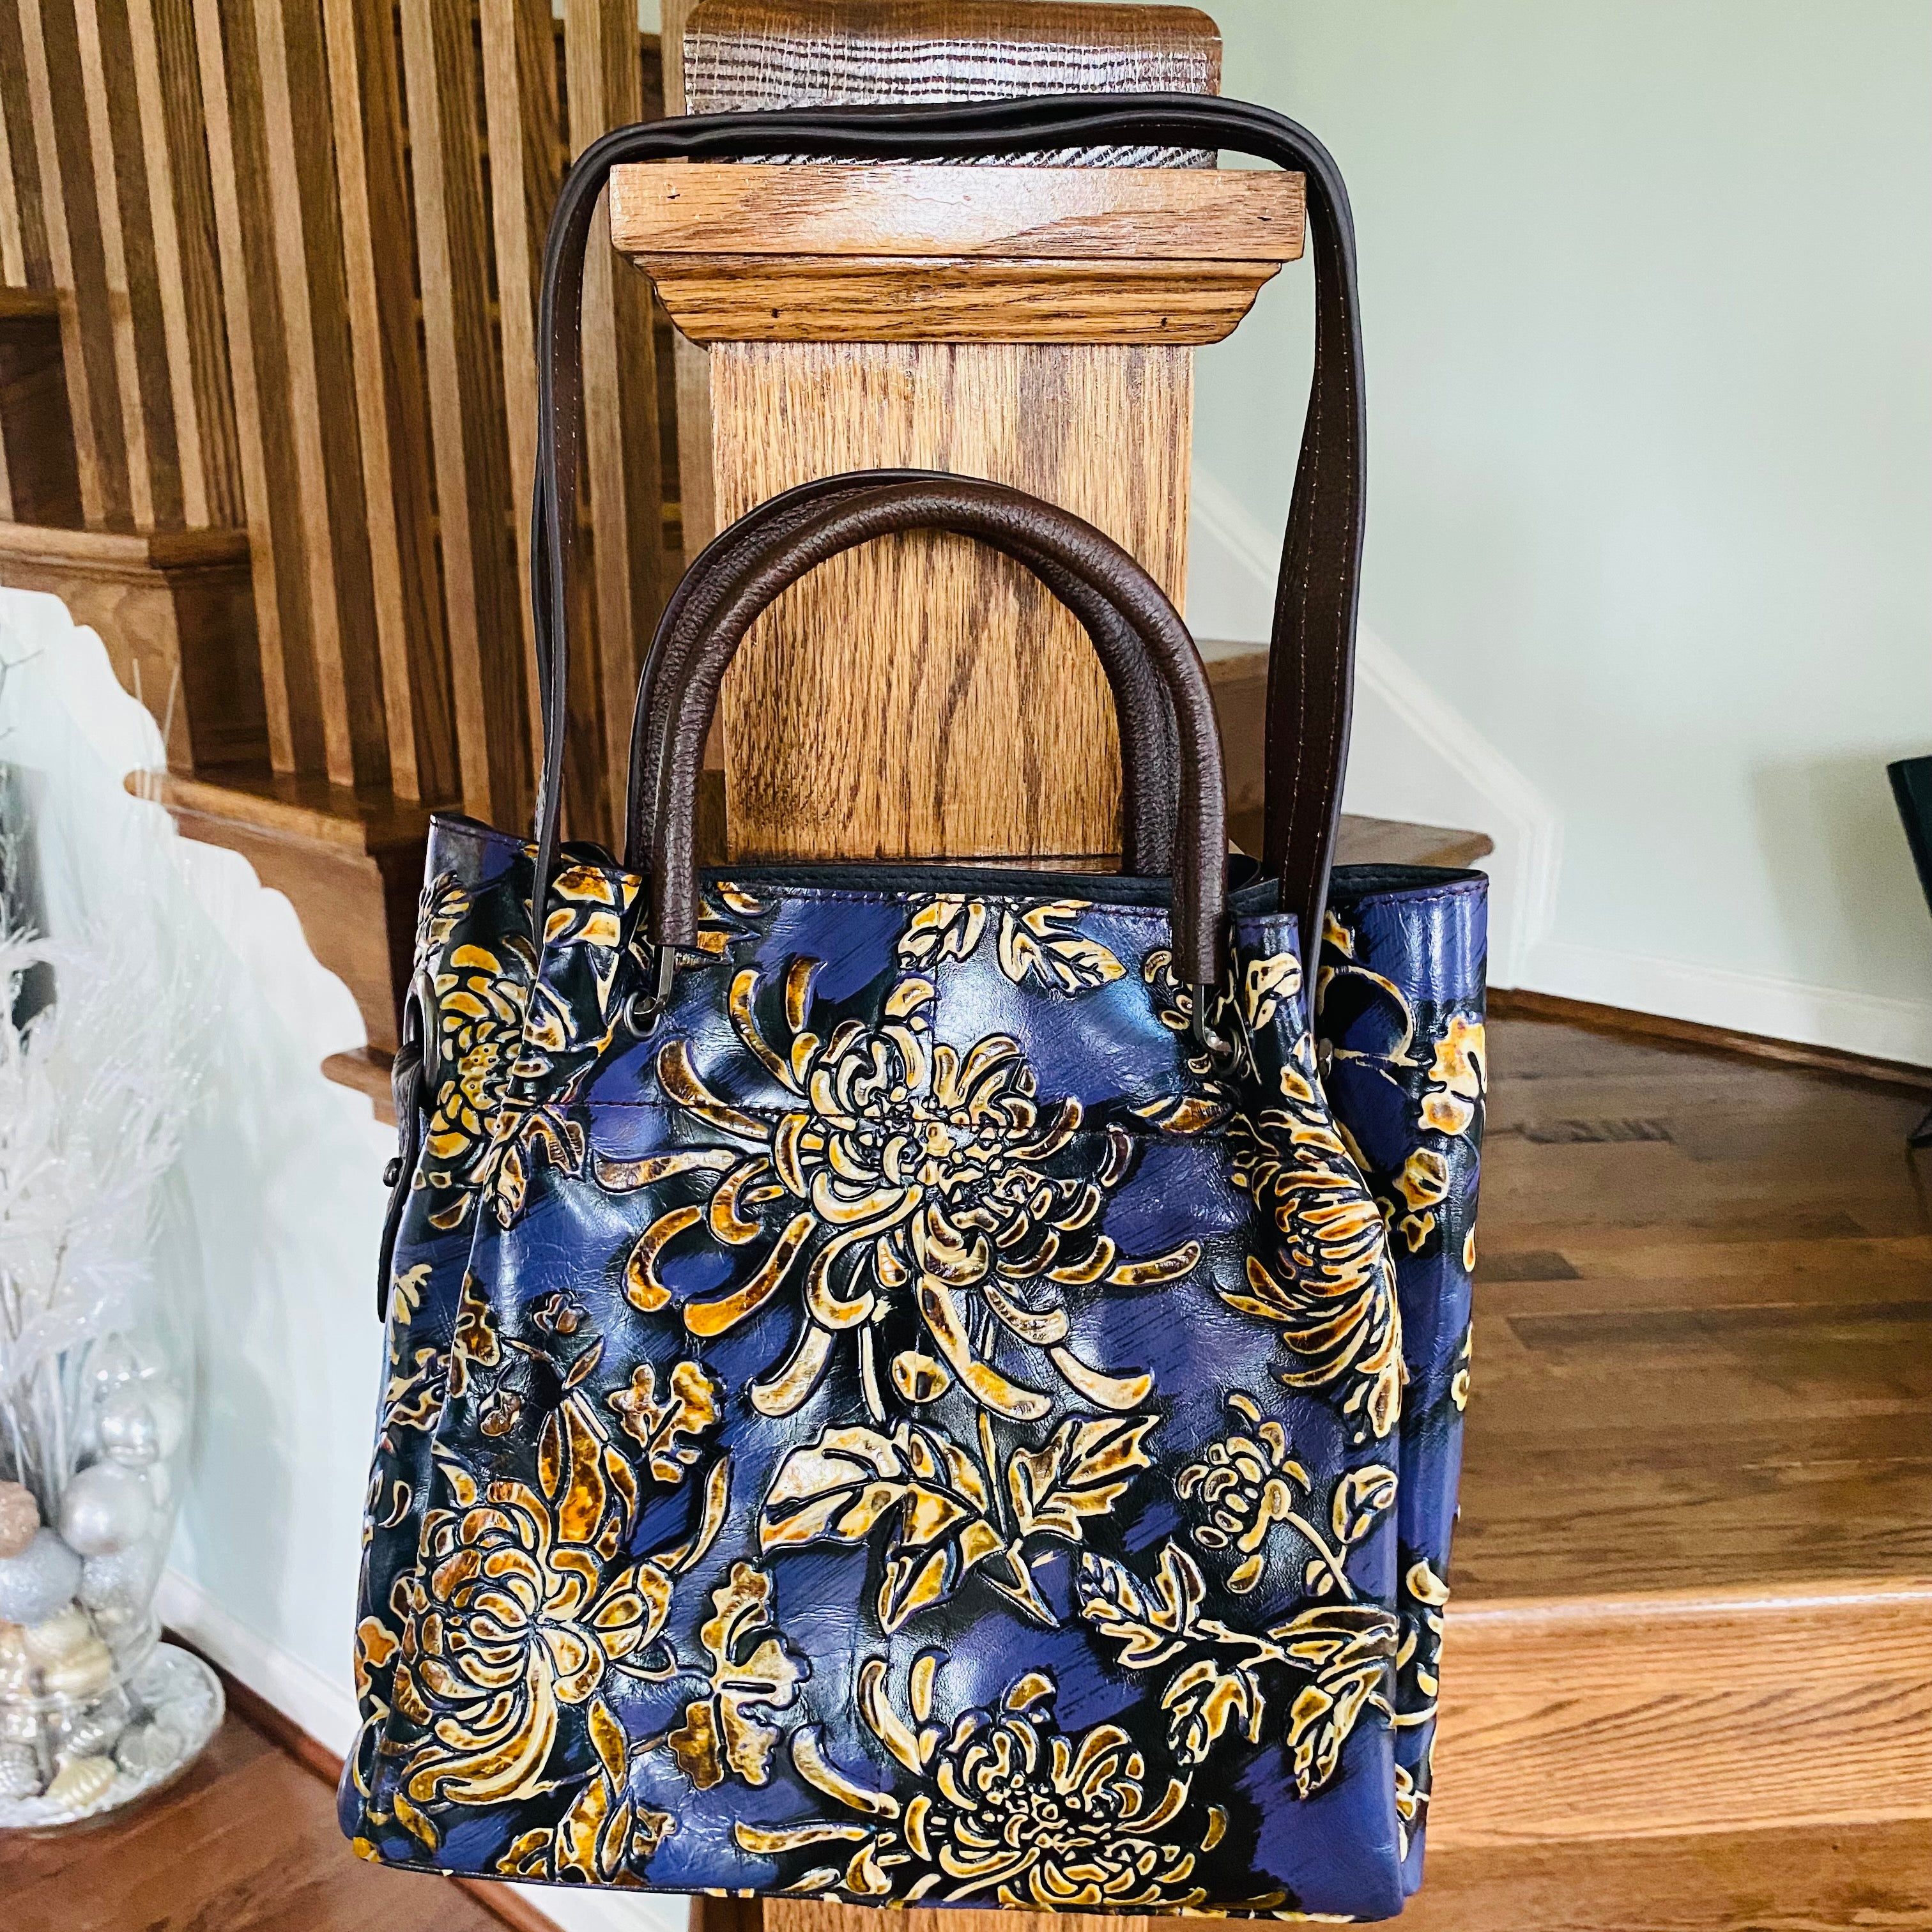 Original Pam designer Bag tote handbag knitting craft shoulder unique green  | eBay